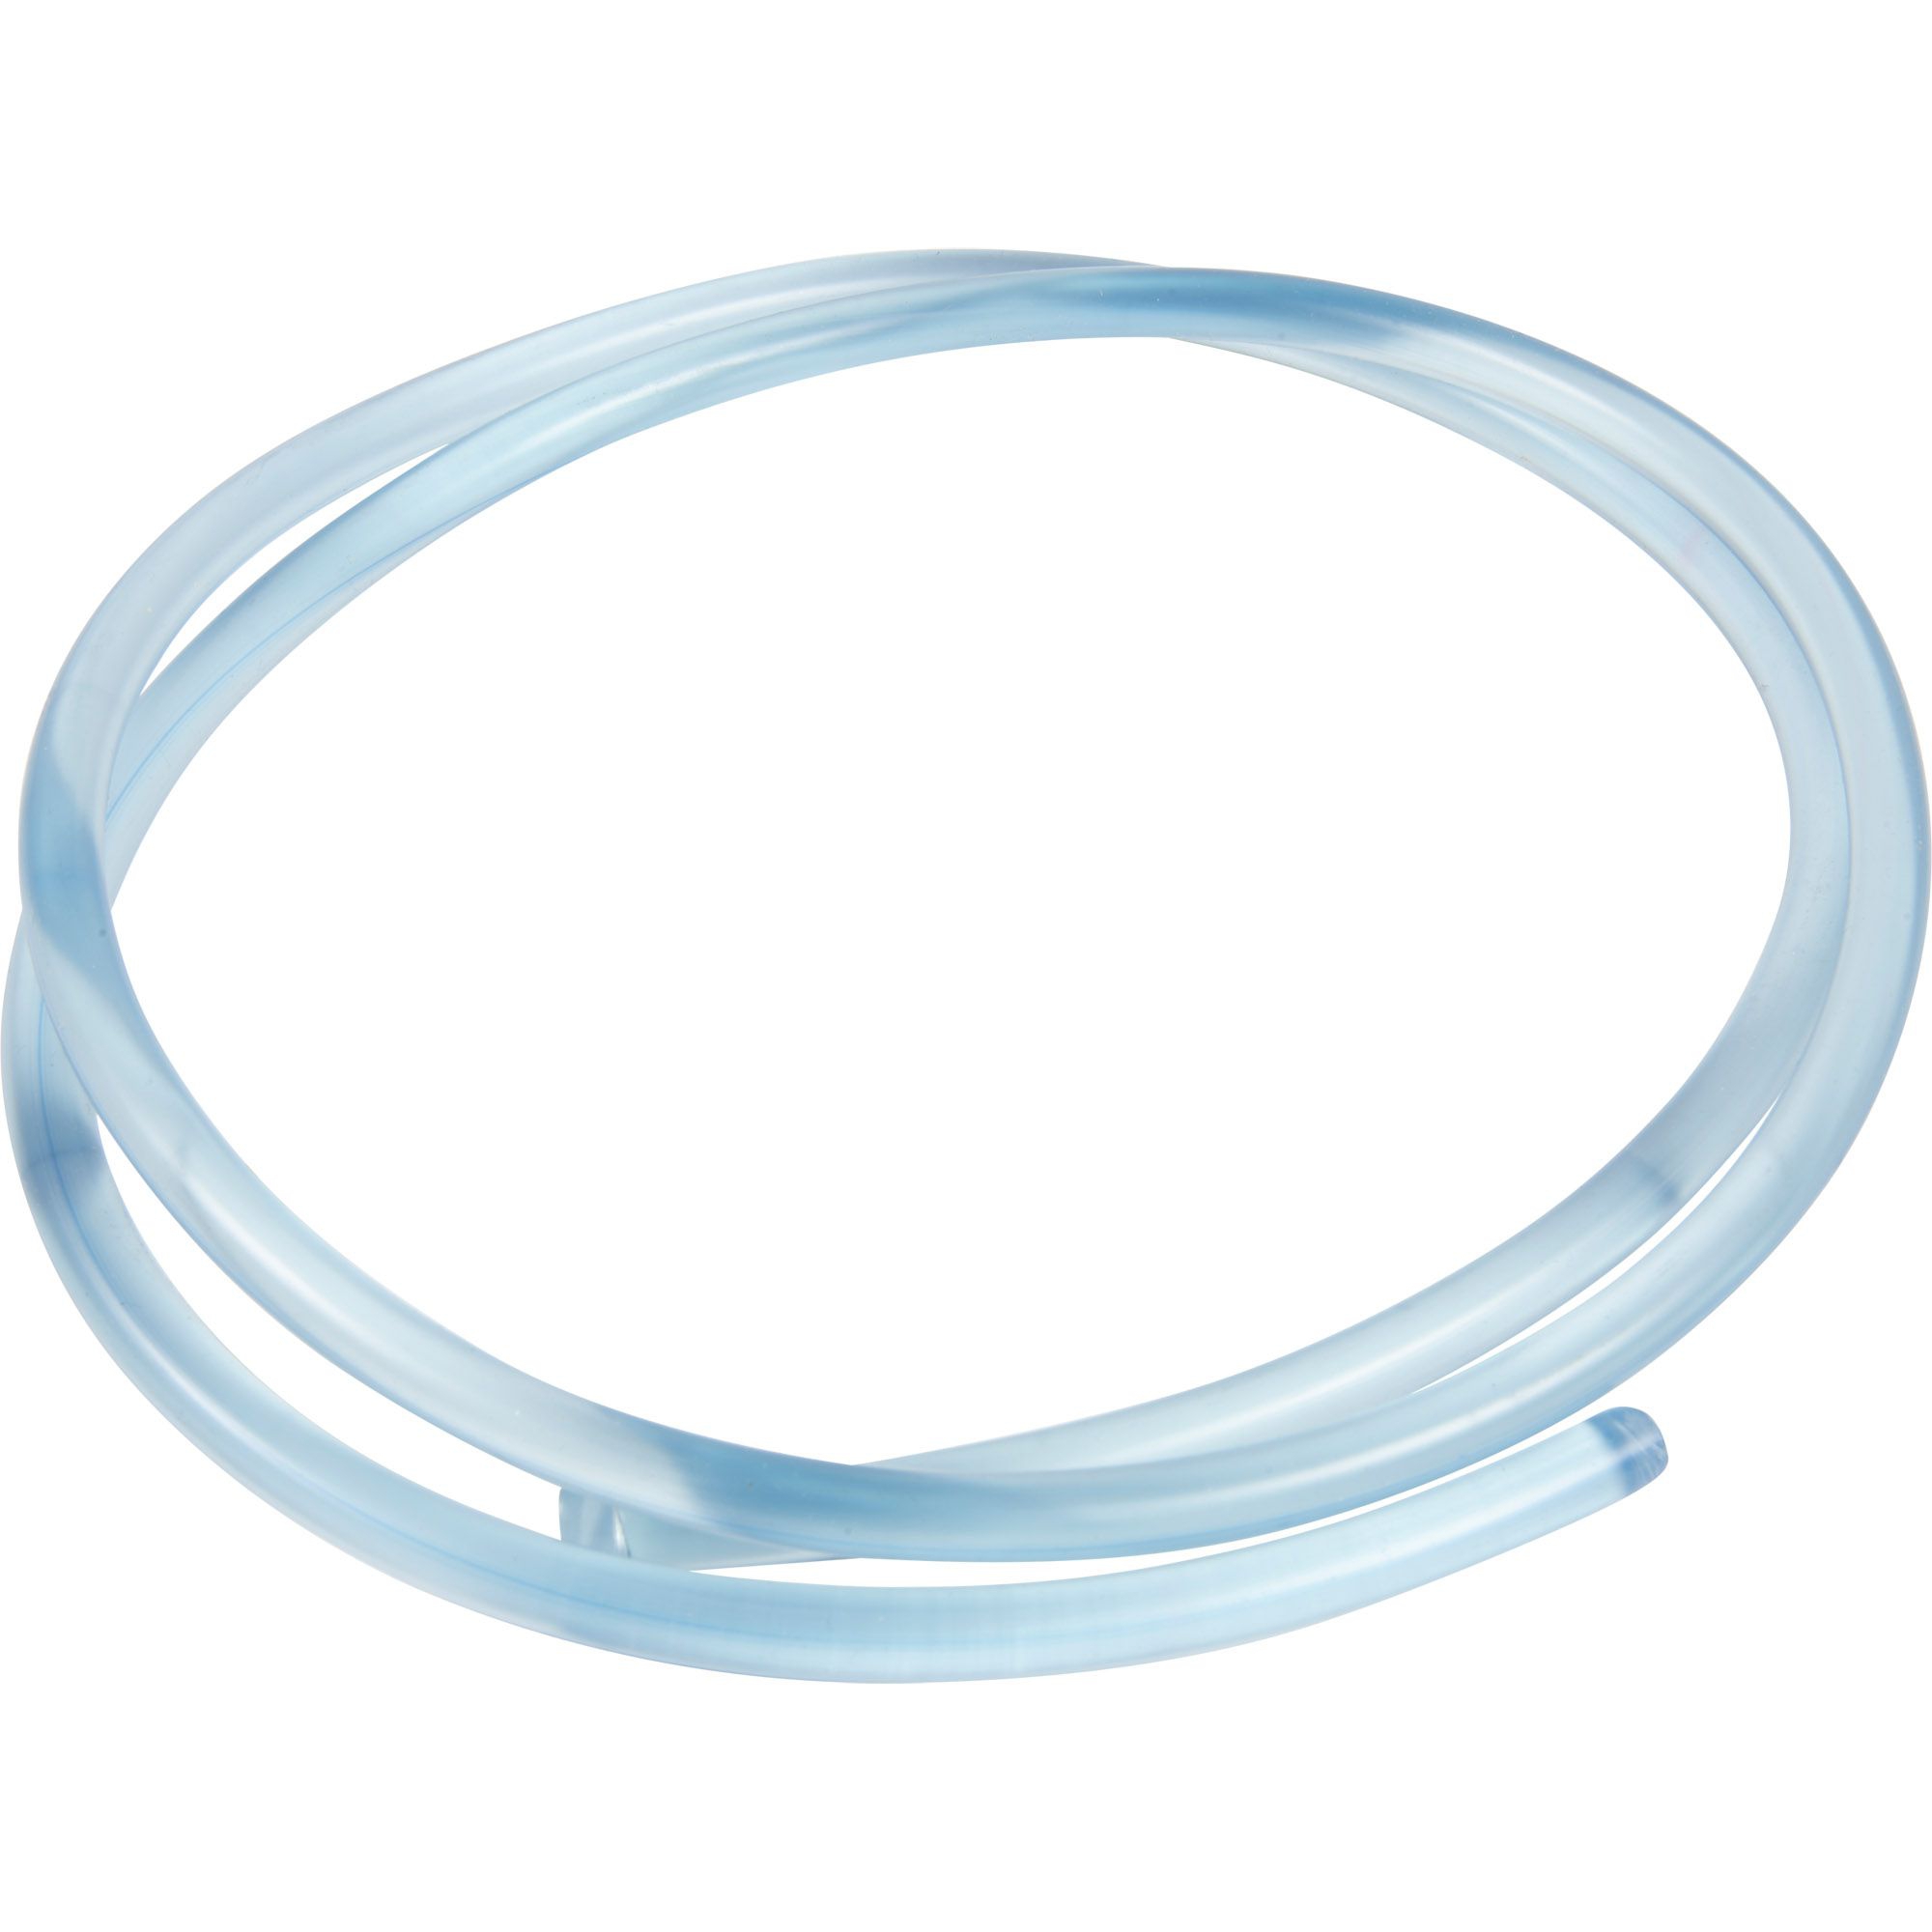 PVC-Seil, Ø 8 mm, transparent, Preis pro Meter